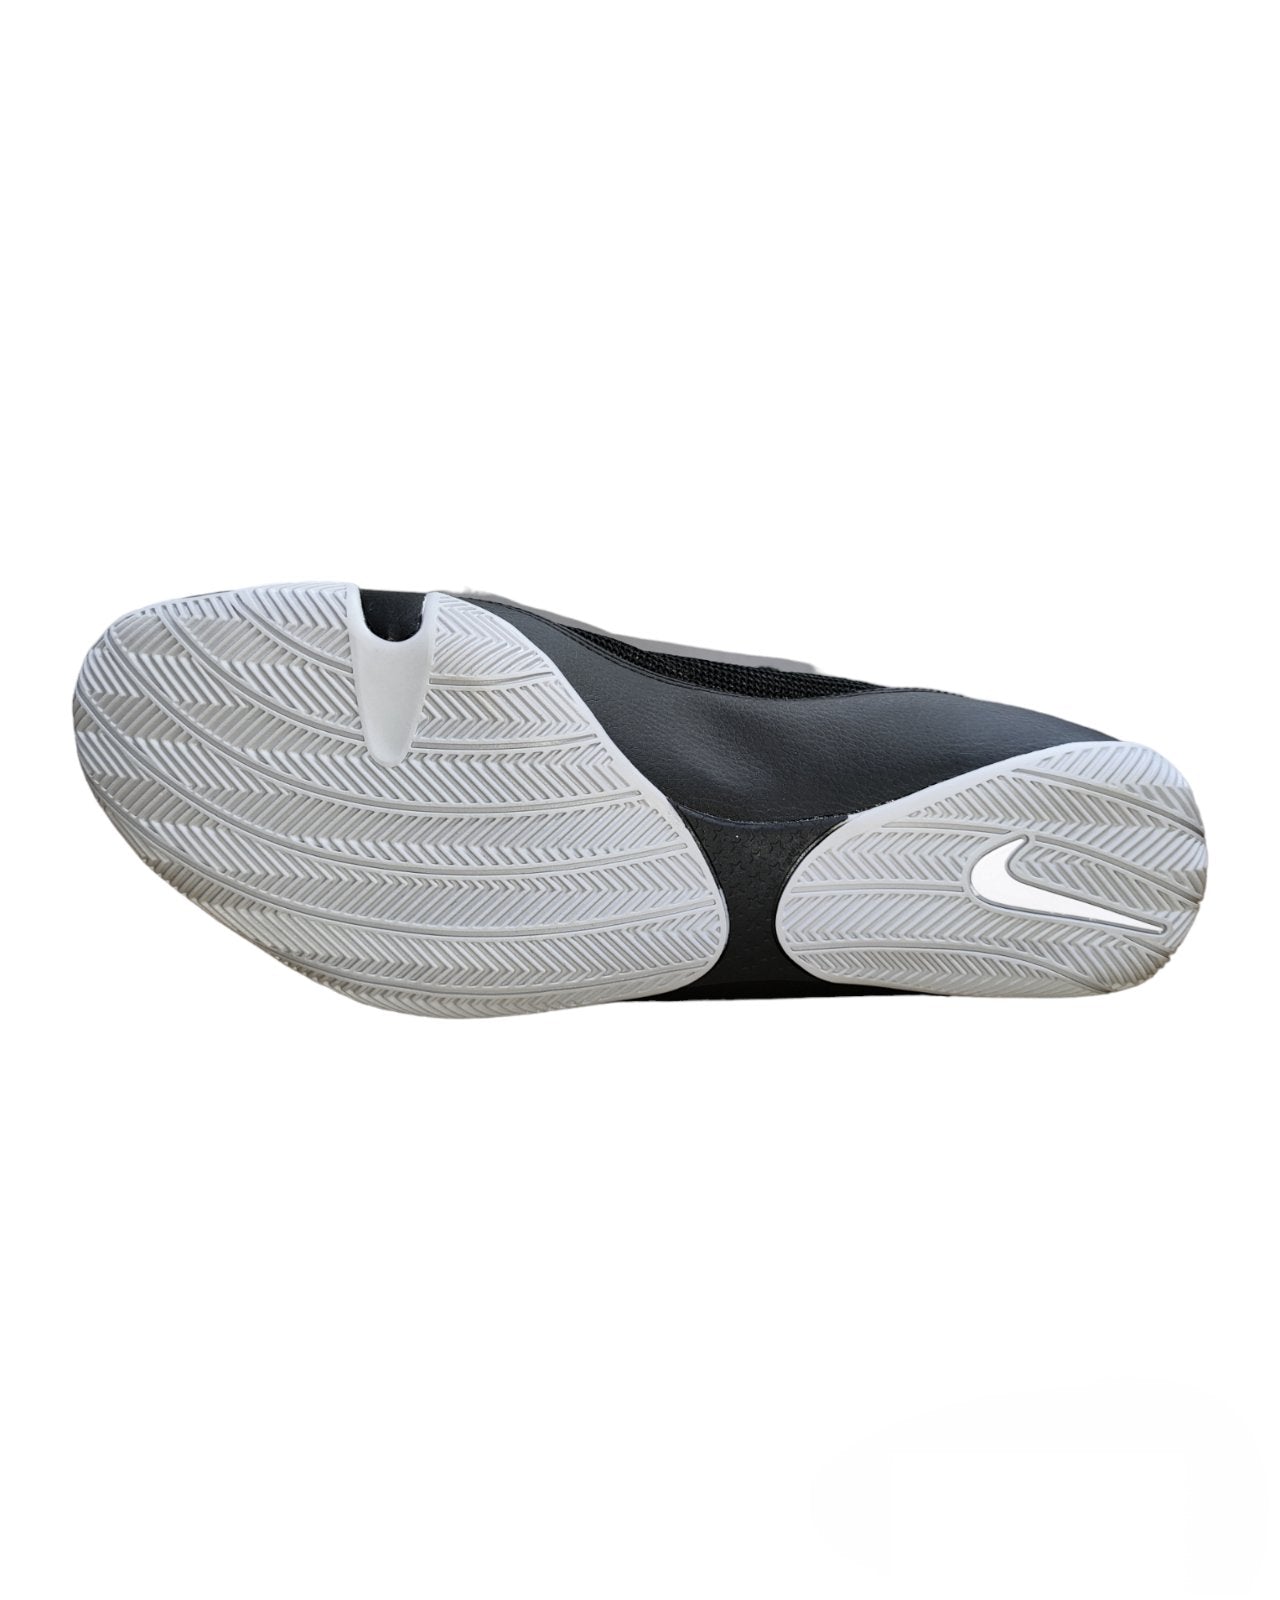 Nike Machomai 2 Boxing Shoes [Black/ White Wolf Gray]